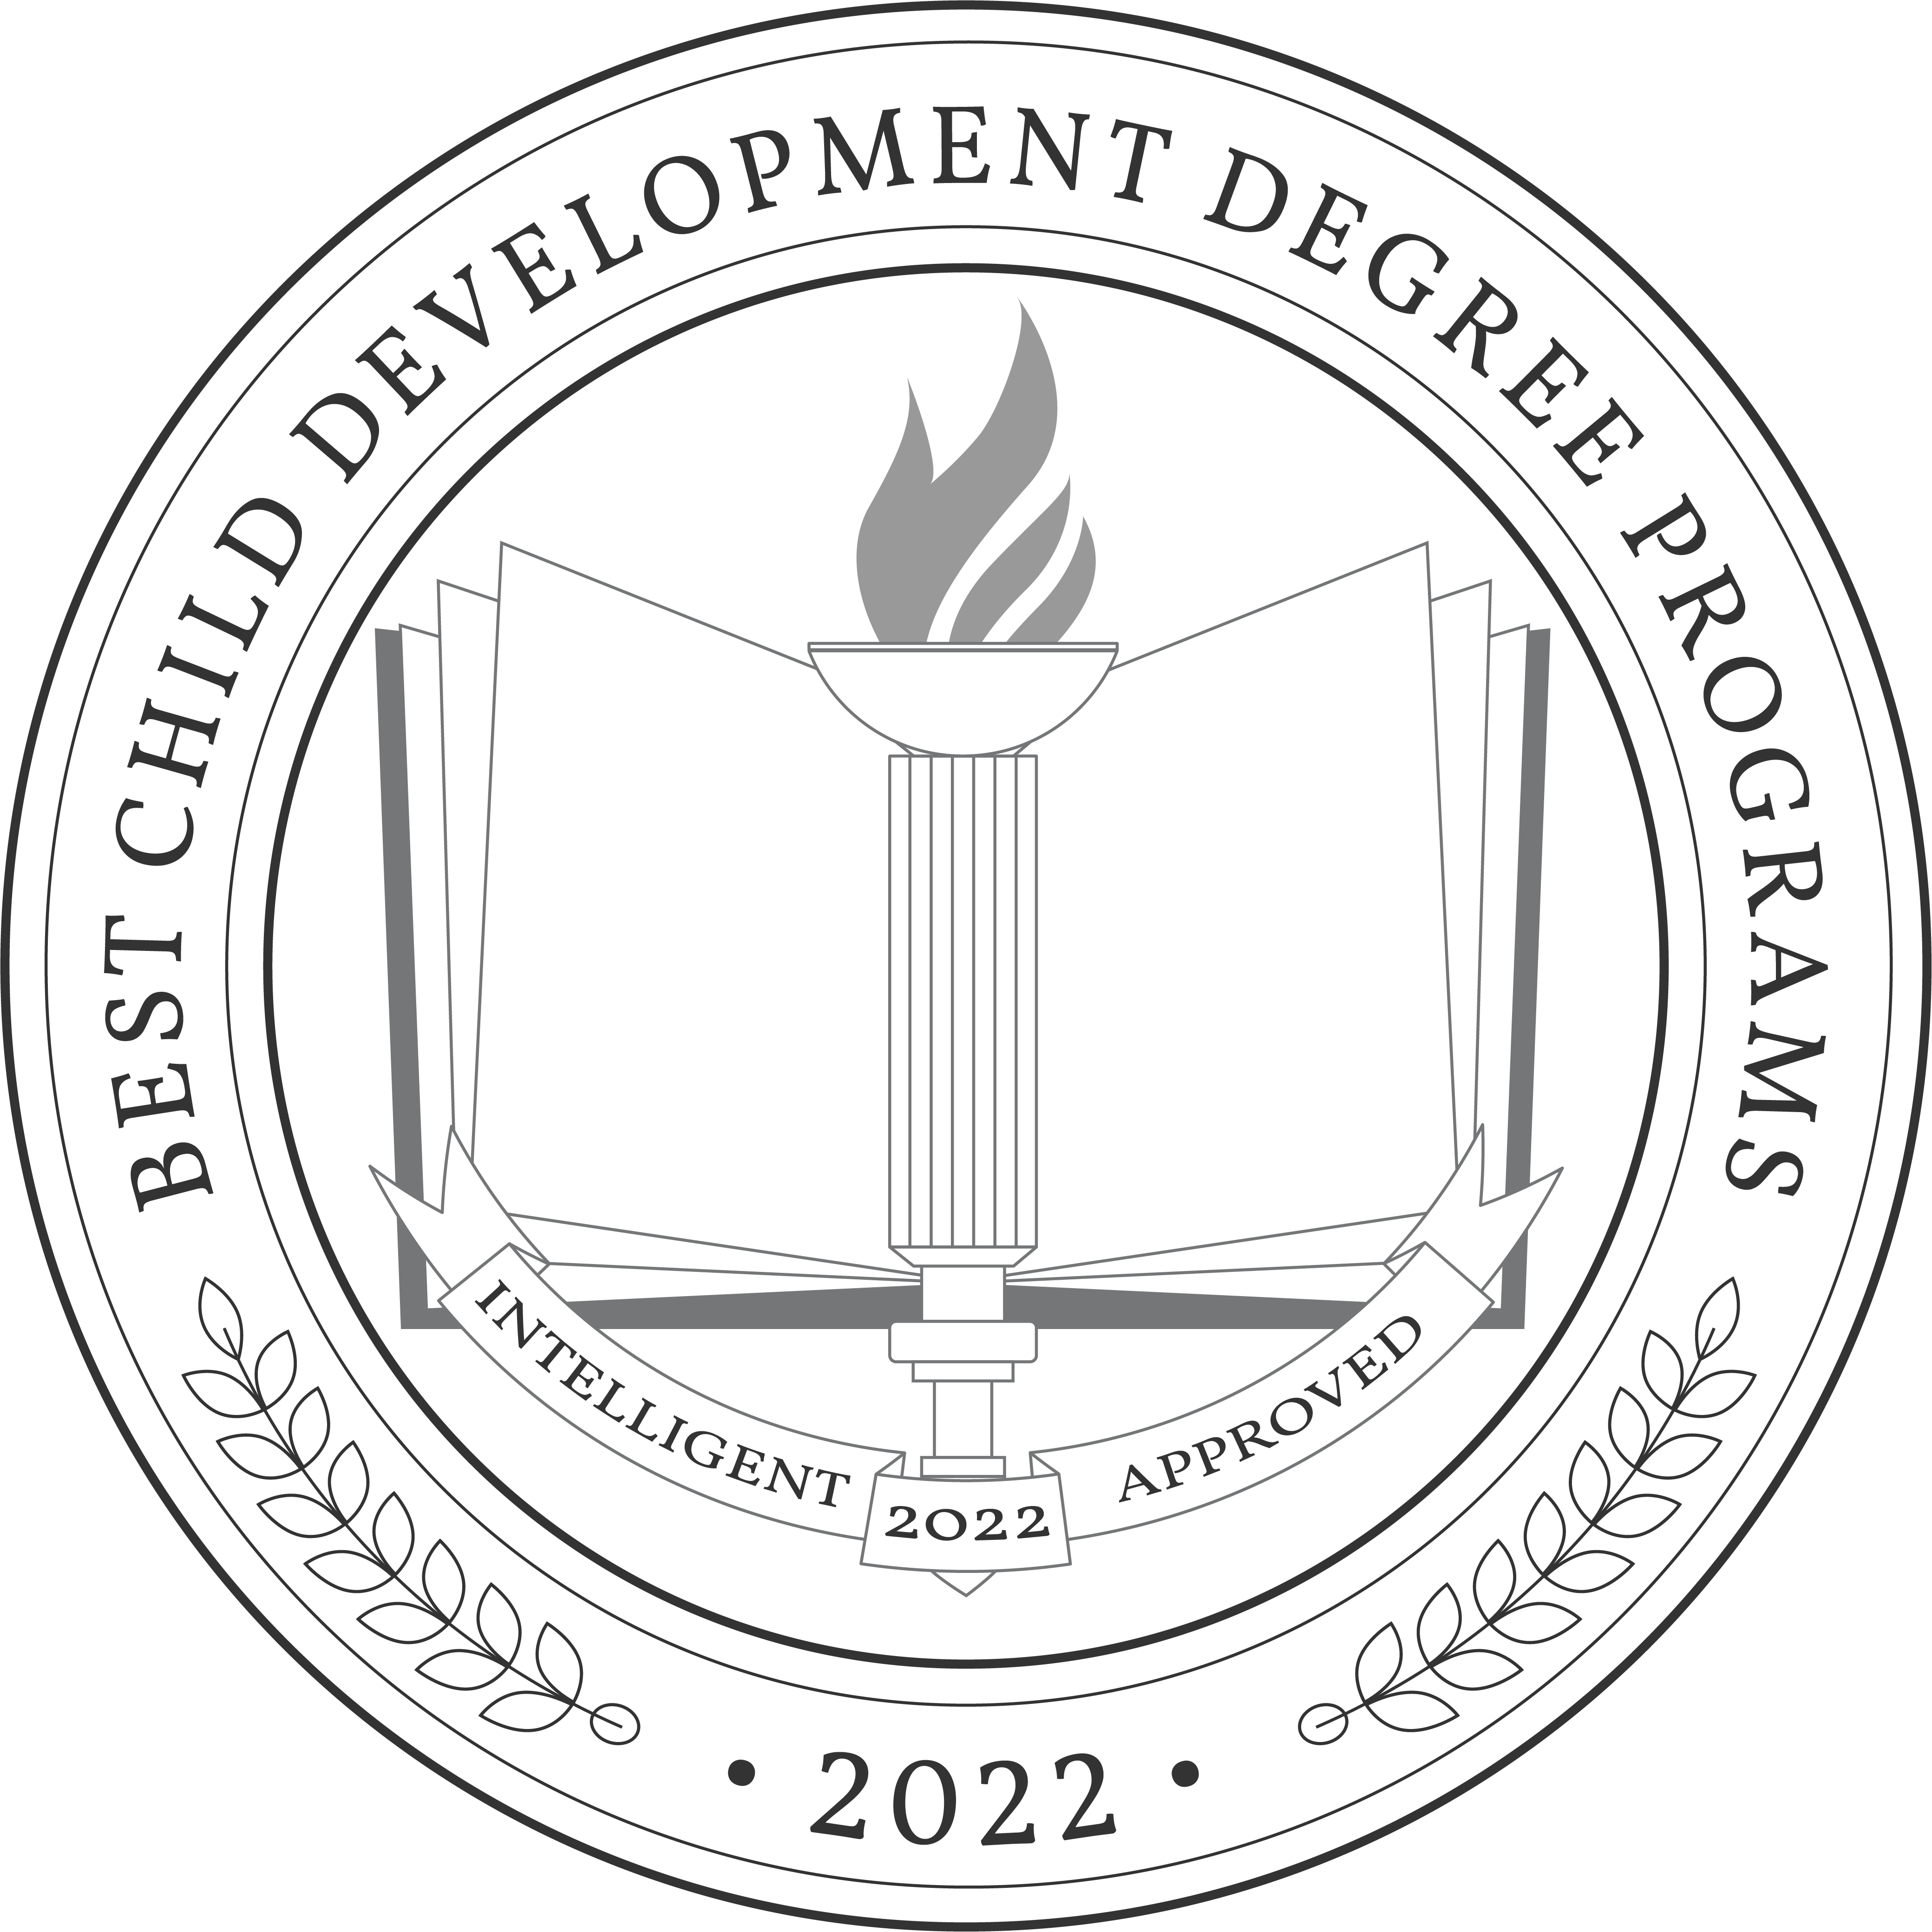 Best Child Development Degree Programs